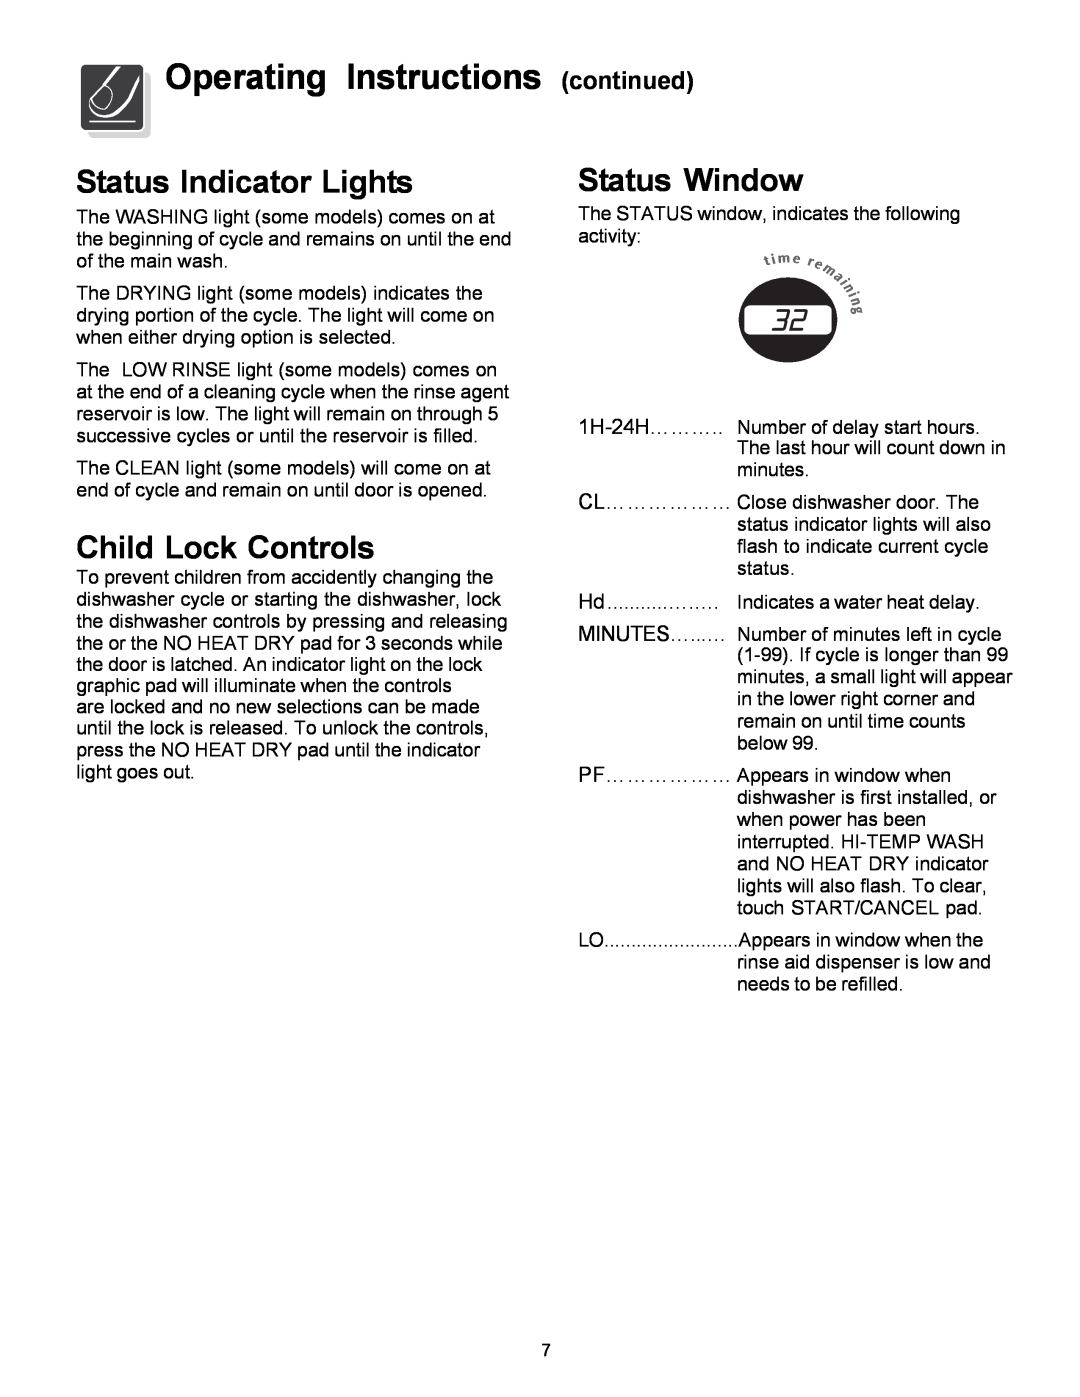 Frigidaire FDB2410HIS Status Indicator Lights, Child Lock Controls, Status Window, Operating Instructions continued 